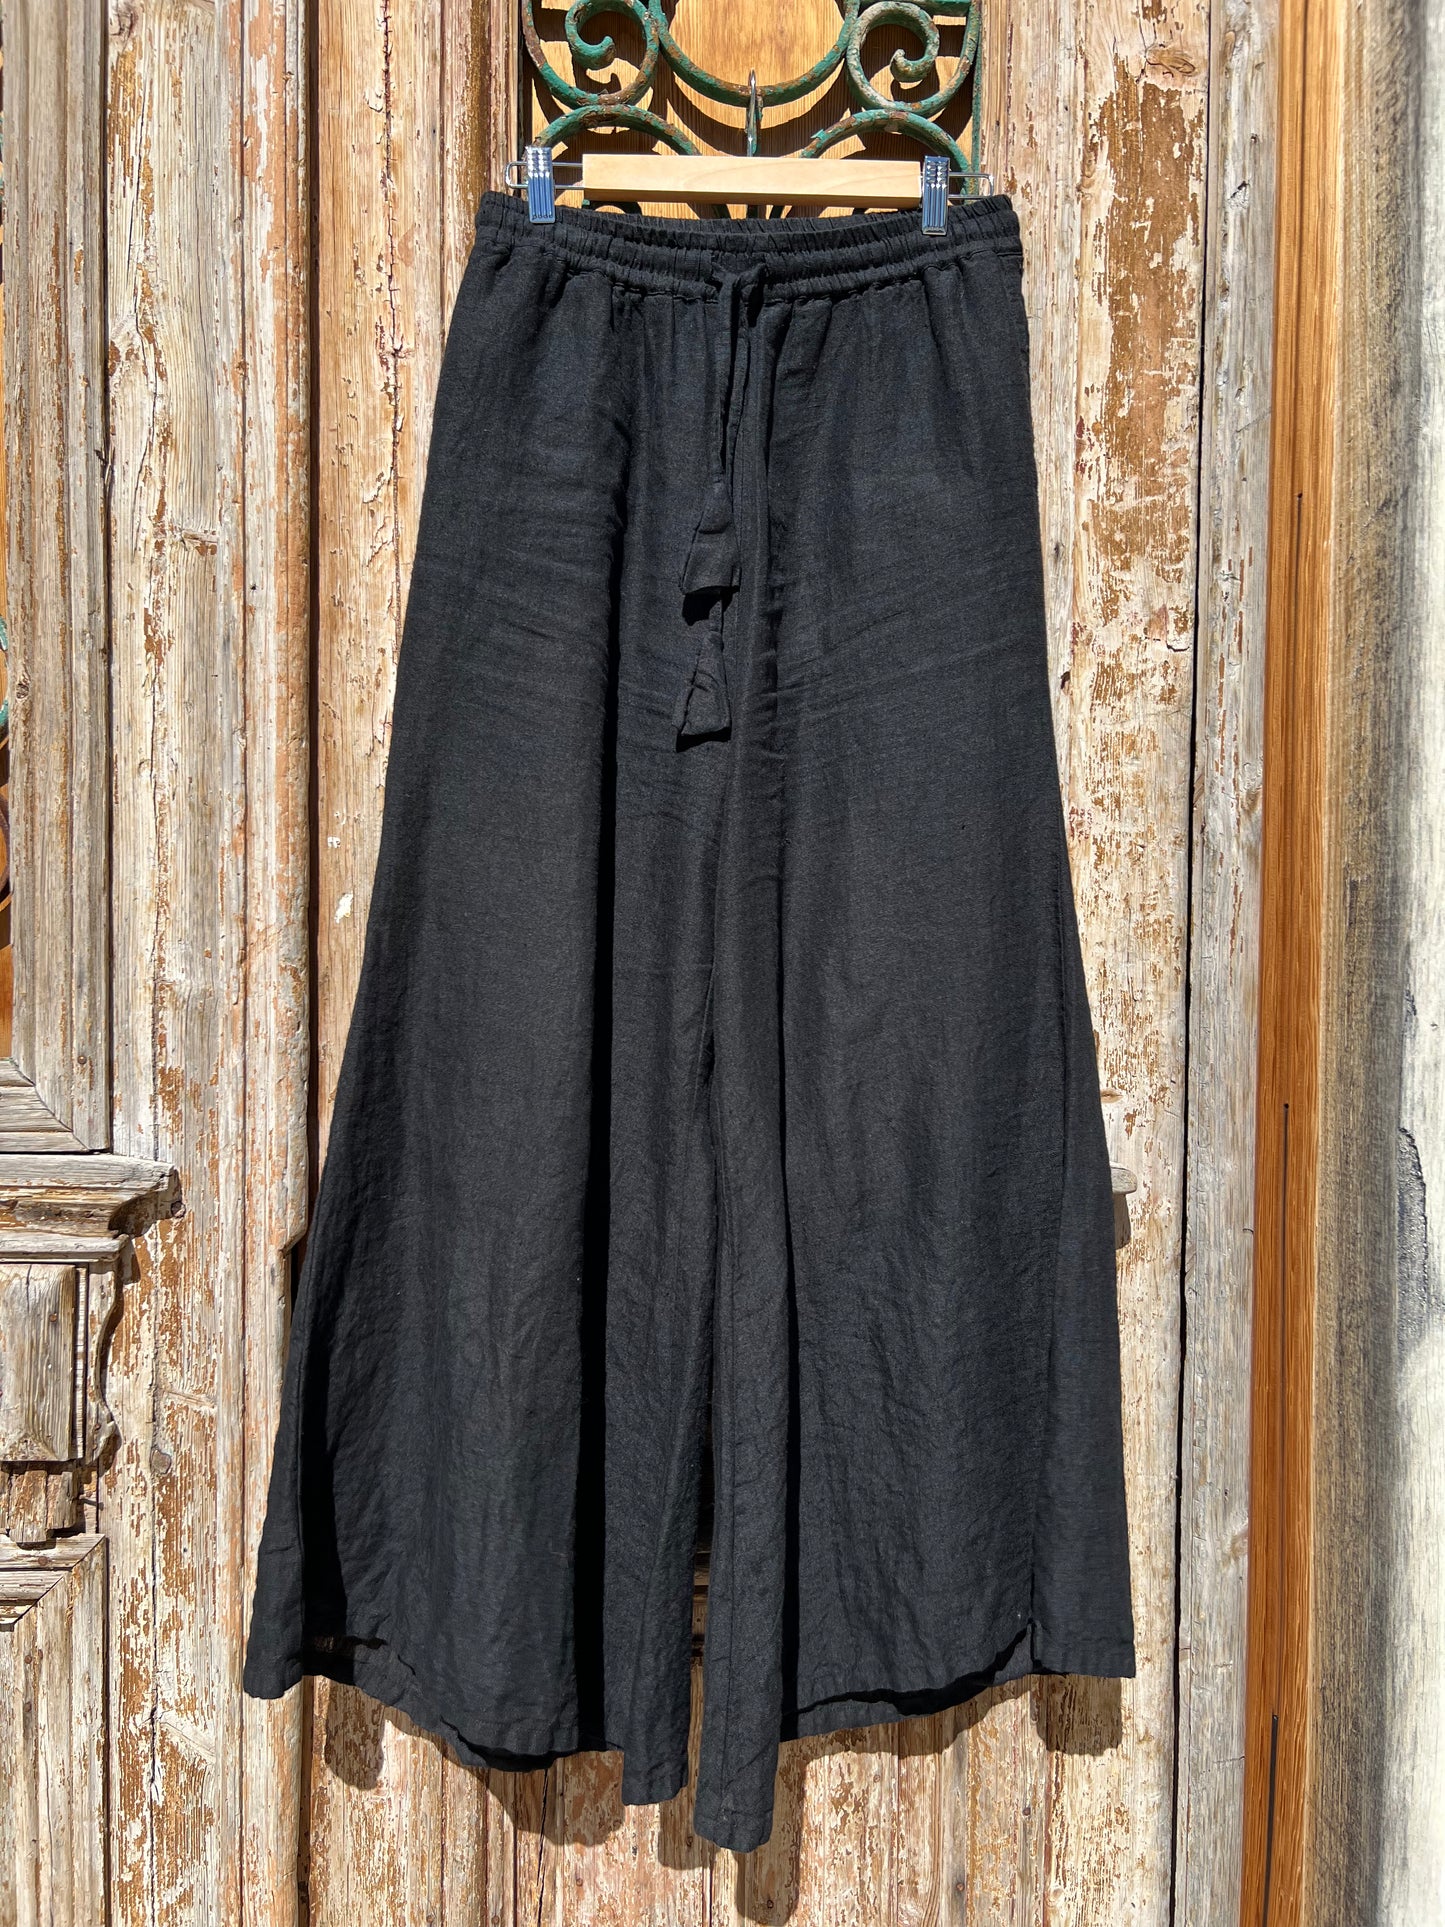 Alghero Pants - Black Linen